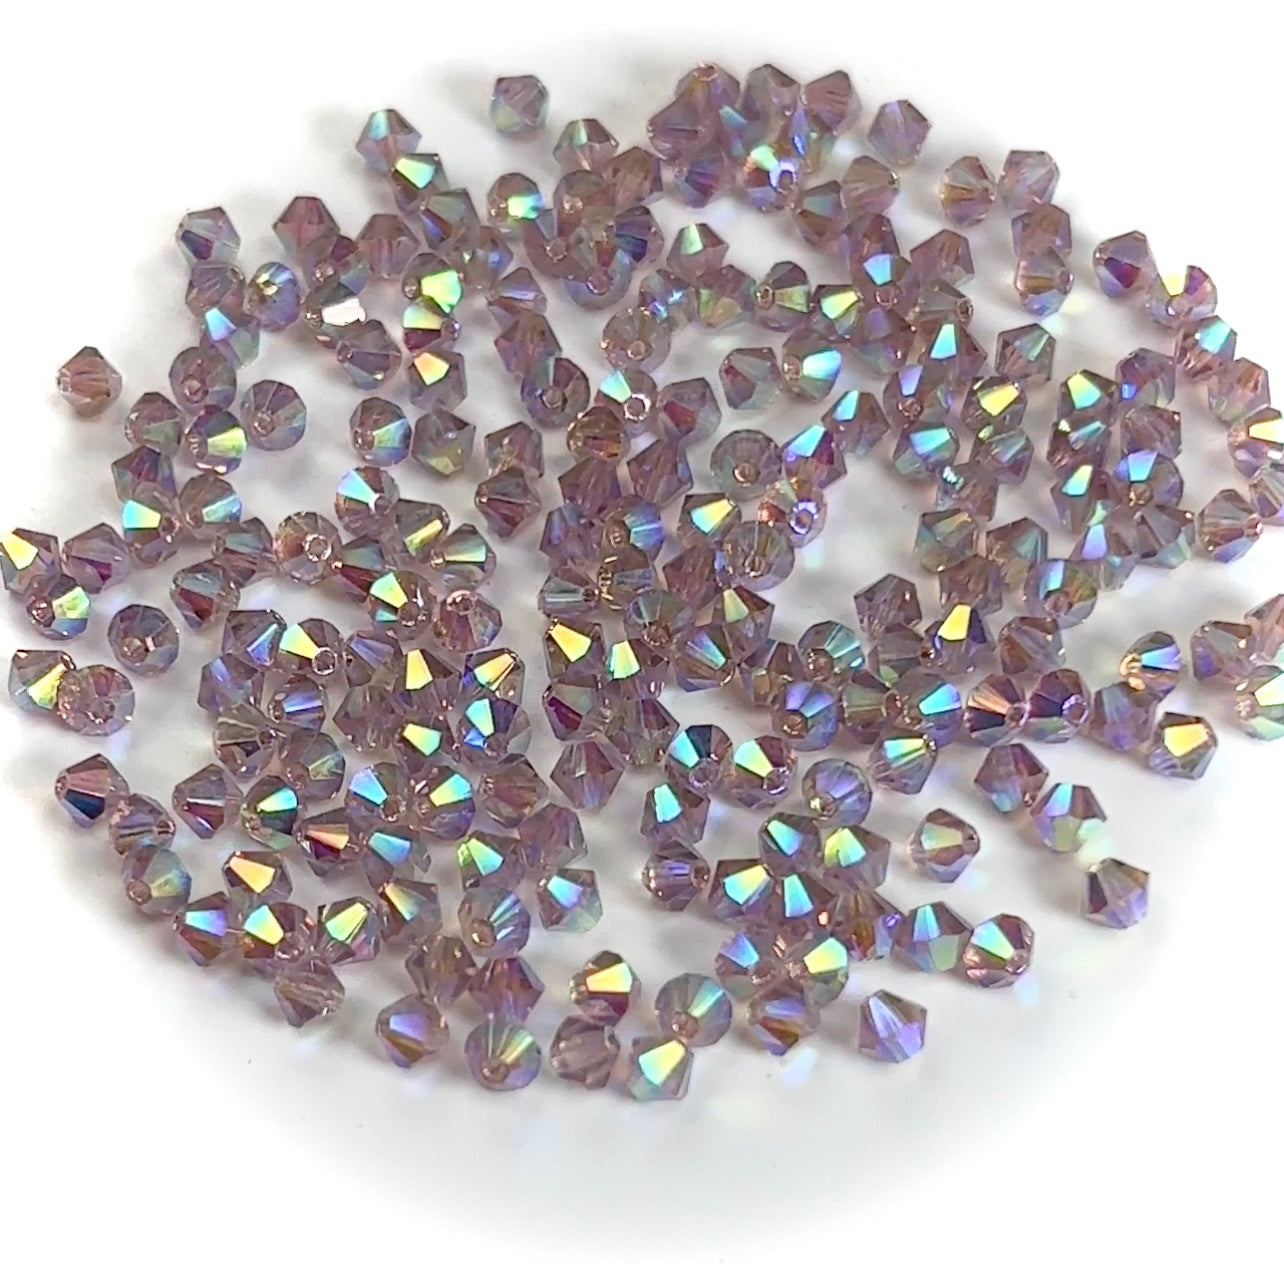 Light Amethyst Marvel-AB, Czech Glass Beads, Machine Cut Bicones (MC Rondell, Diamond Shape), light purple crystals coated with RICH Aurora Borealis